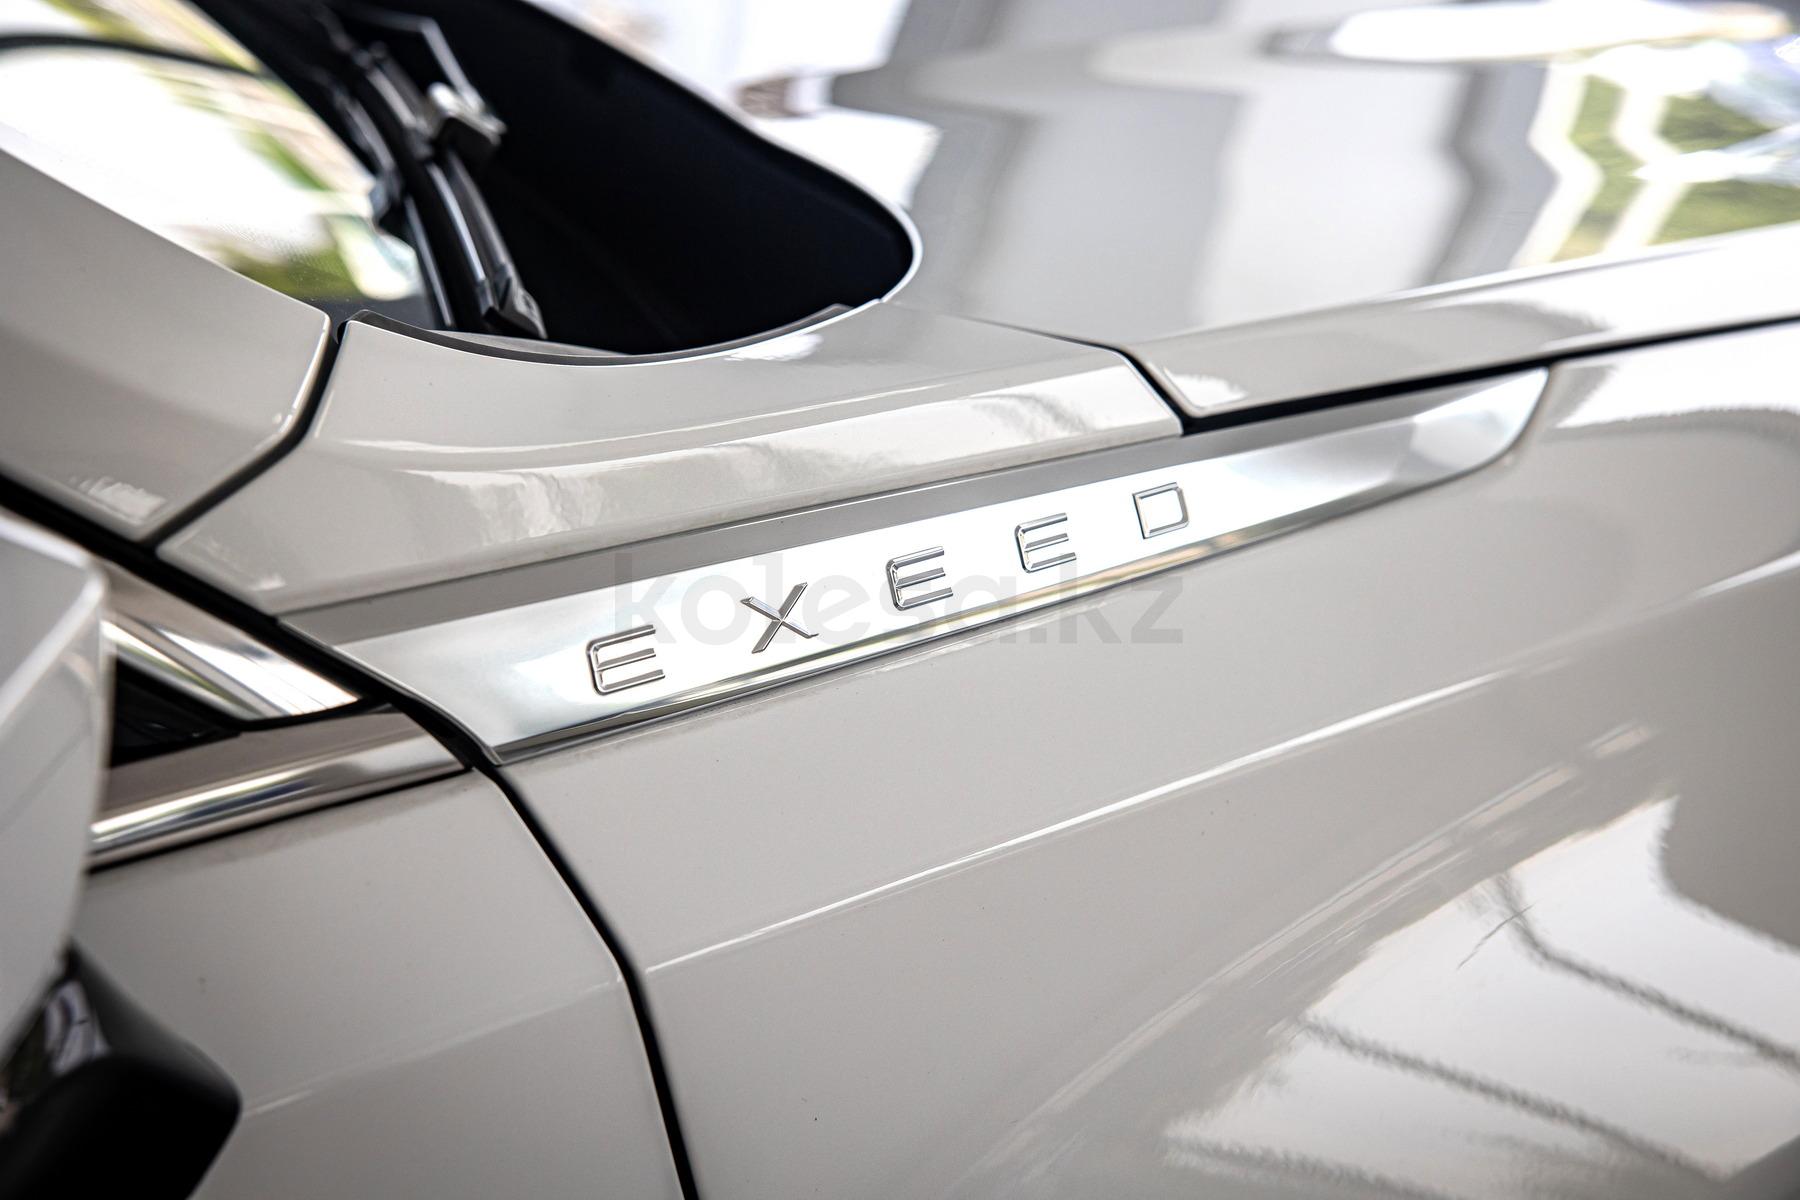 Exeed VX SUV 2021 - н.в. года от 17 590 000 тенге